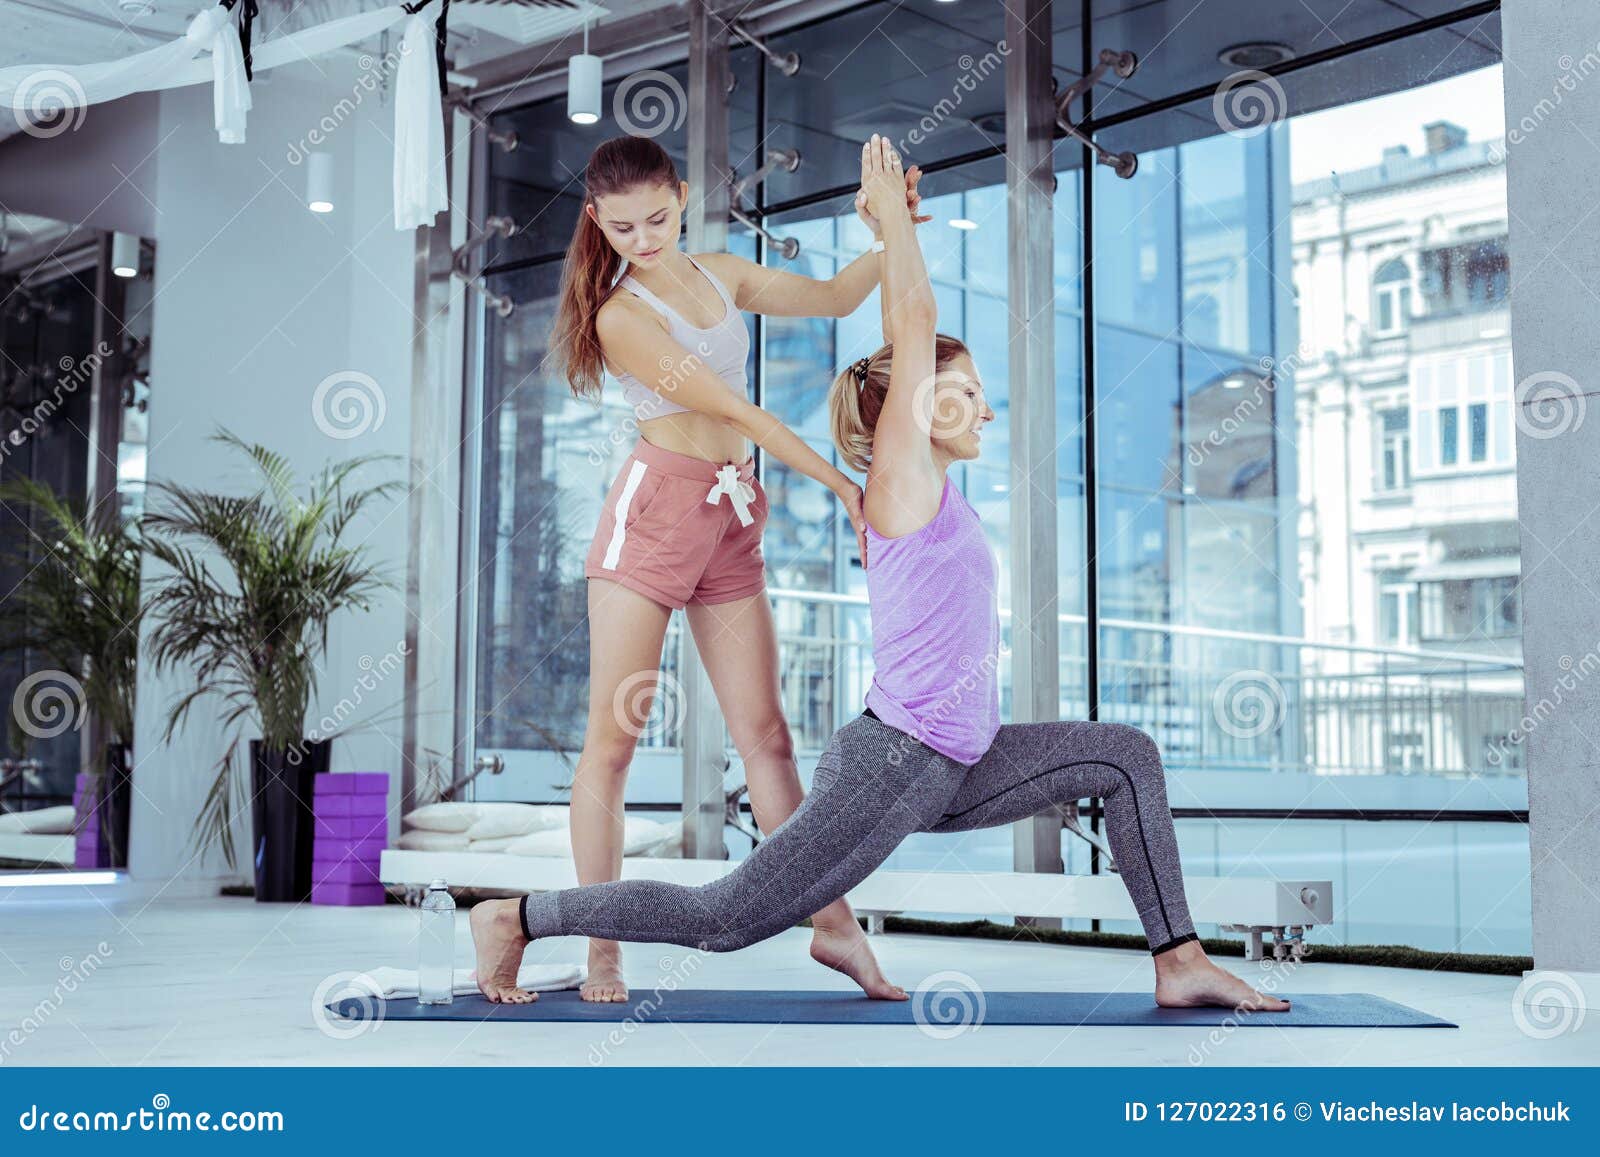 Getting flexy 🤩 #fyp #yoga #challenge #couples #fittok | TikTok